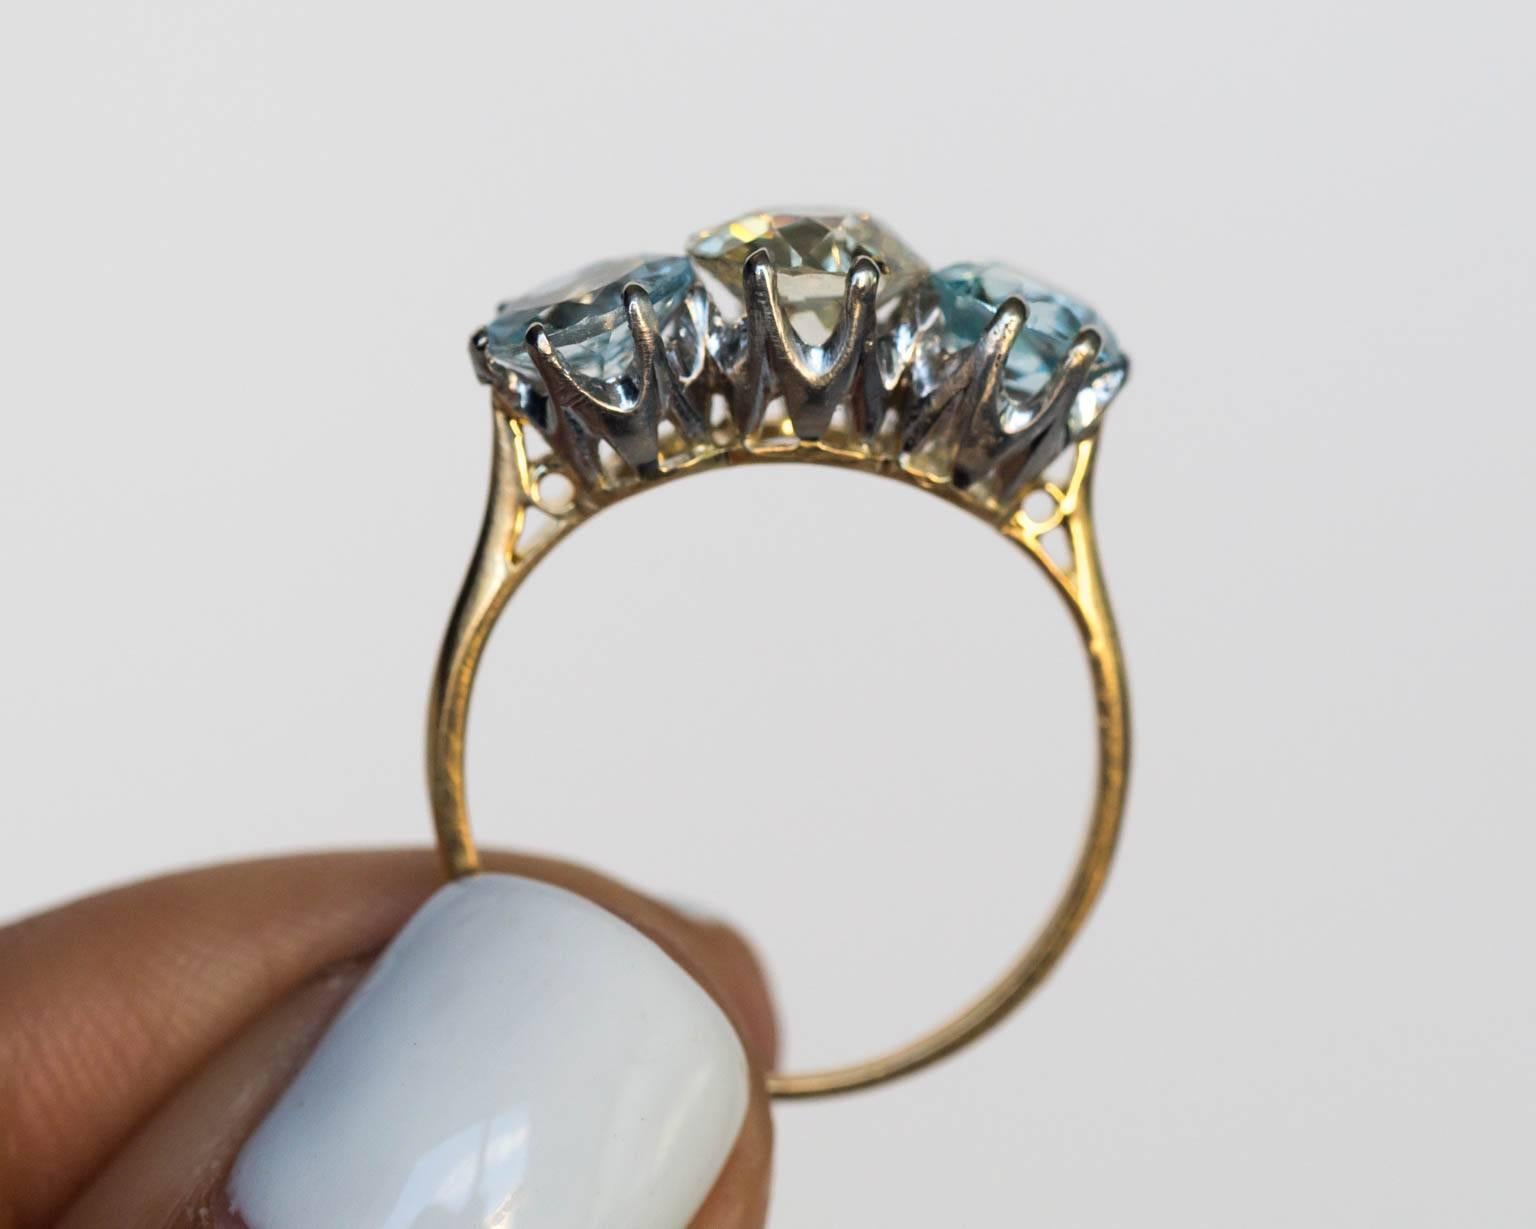 1910 Edwardian Gold Engagement Ring with 1.05 Carat Diamond and Aquamarines 1